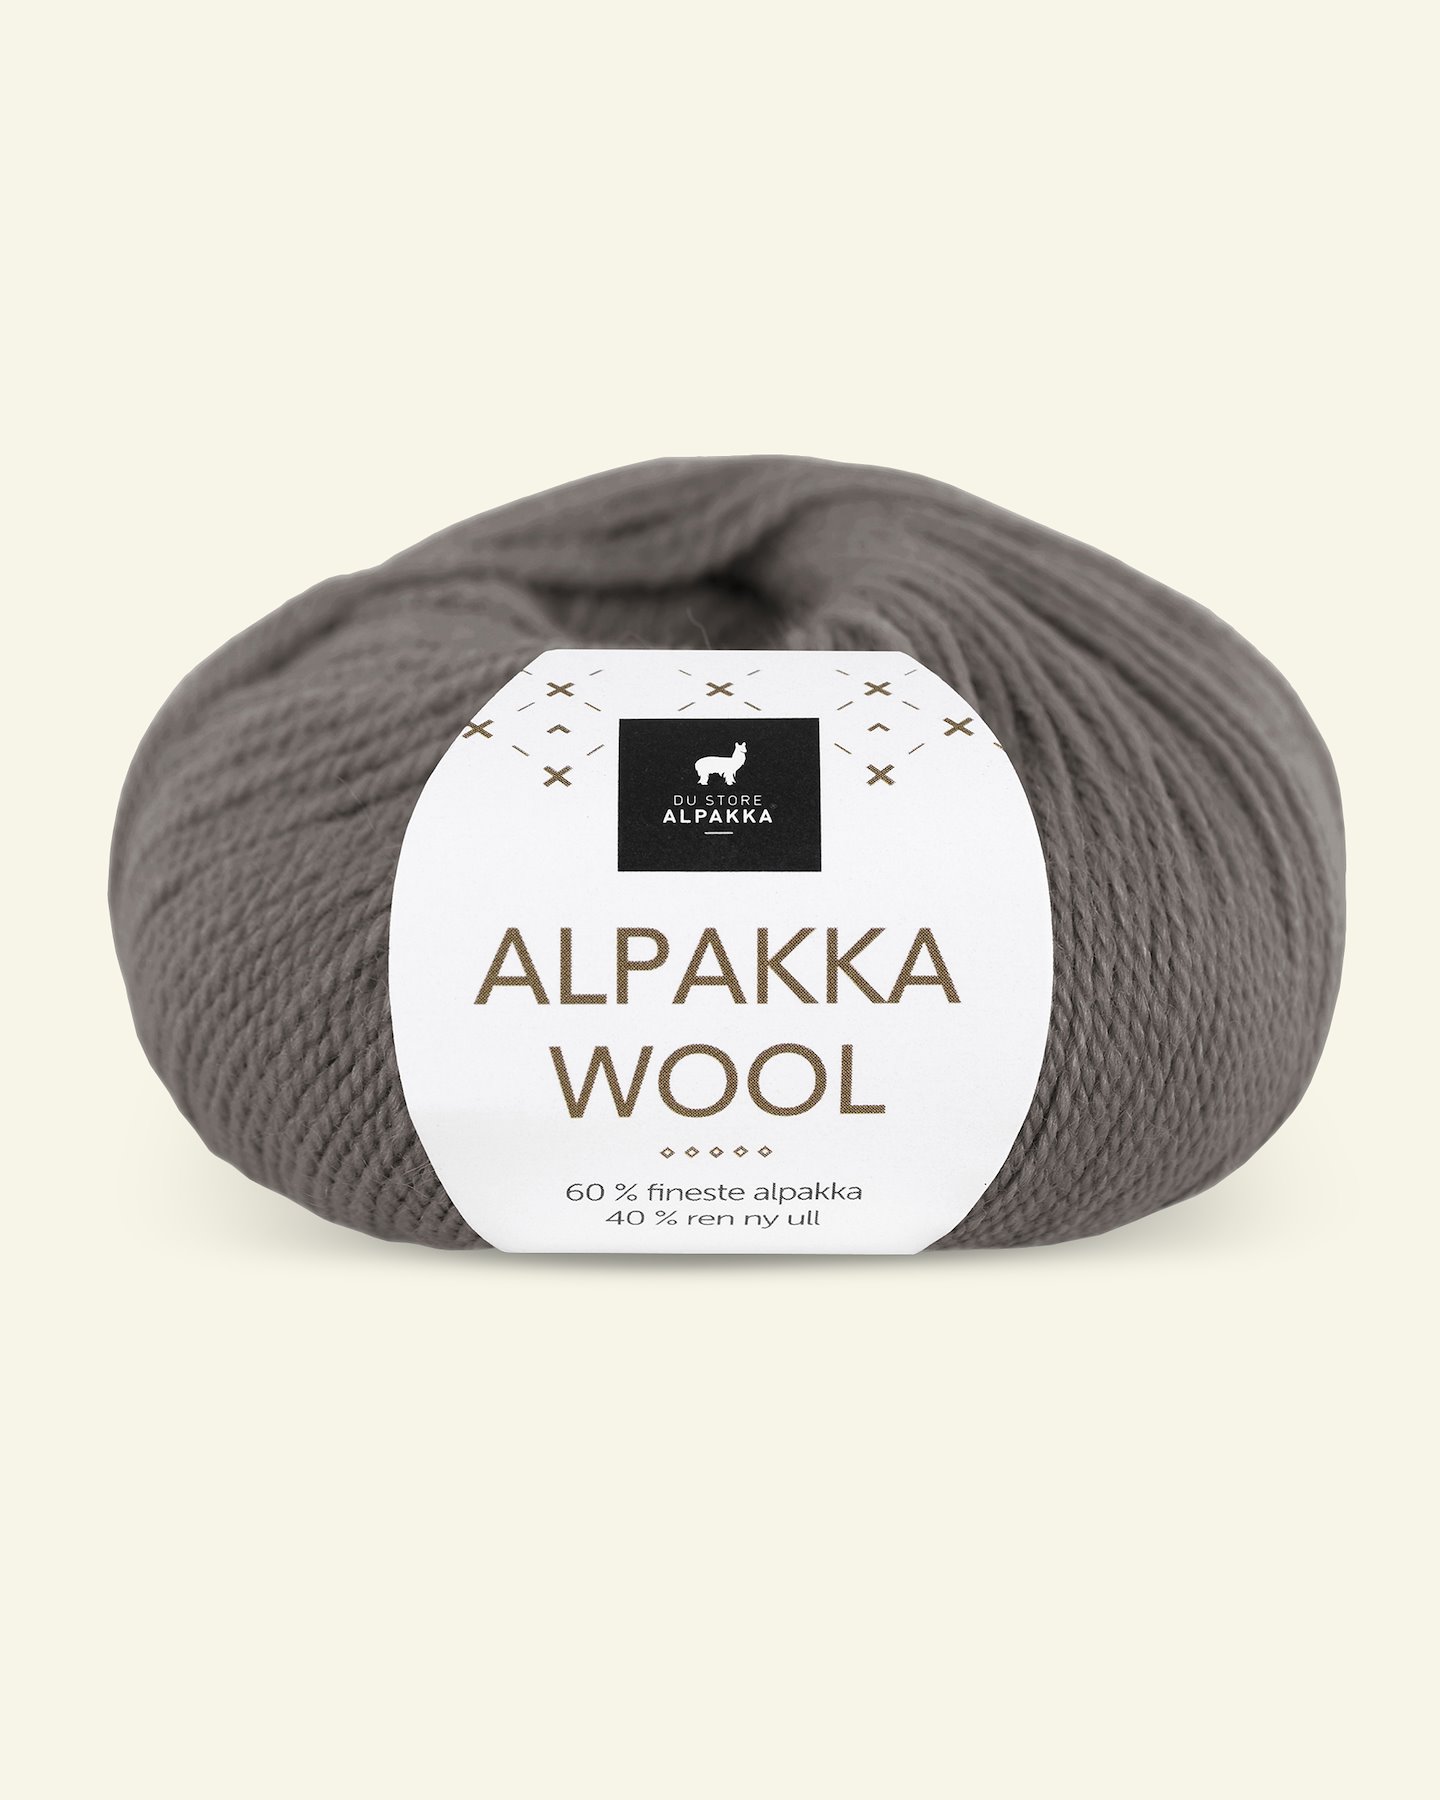 Du Store Alpakka, Alpaka Wolle "Alpakka Wool", maulwurf (552) 90000569_pack